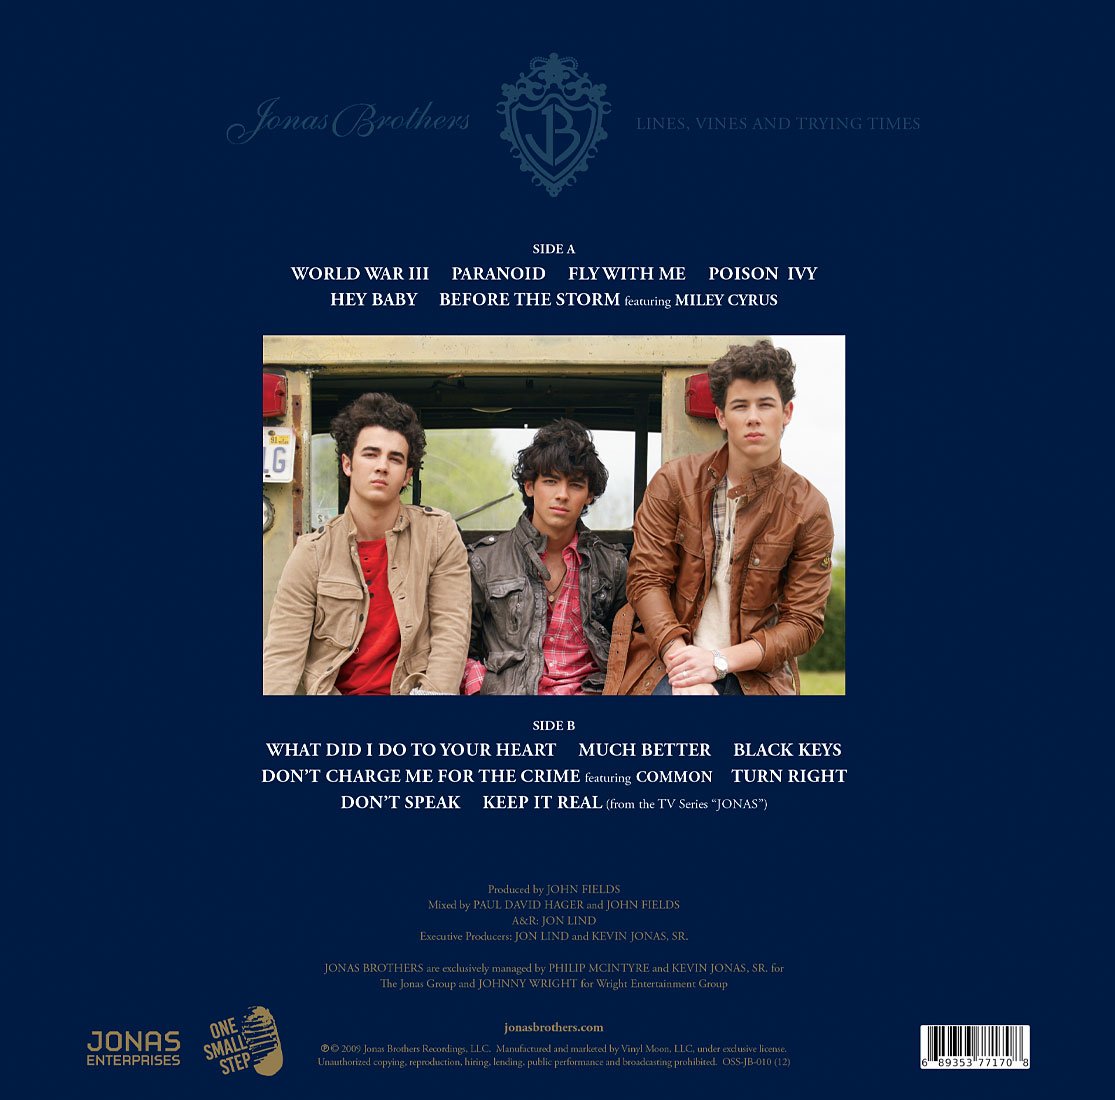 Jonas Brothers - Lines, Vines and Trying Times LP (CLEAR vinyl) - JONAS VINYL CLUB